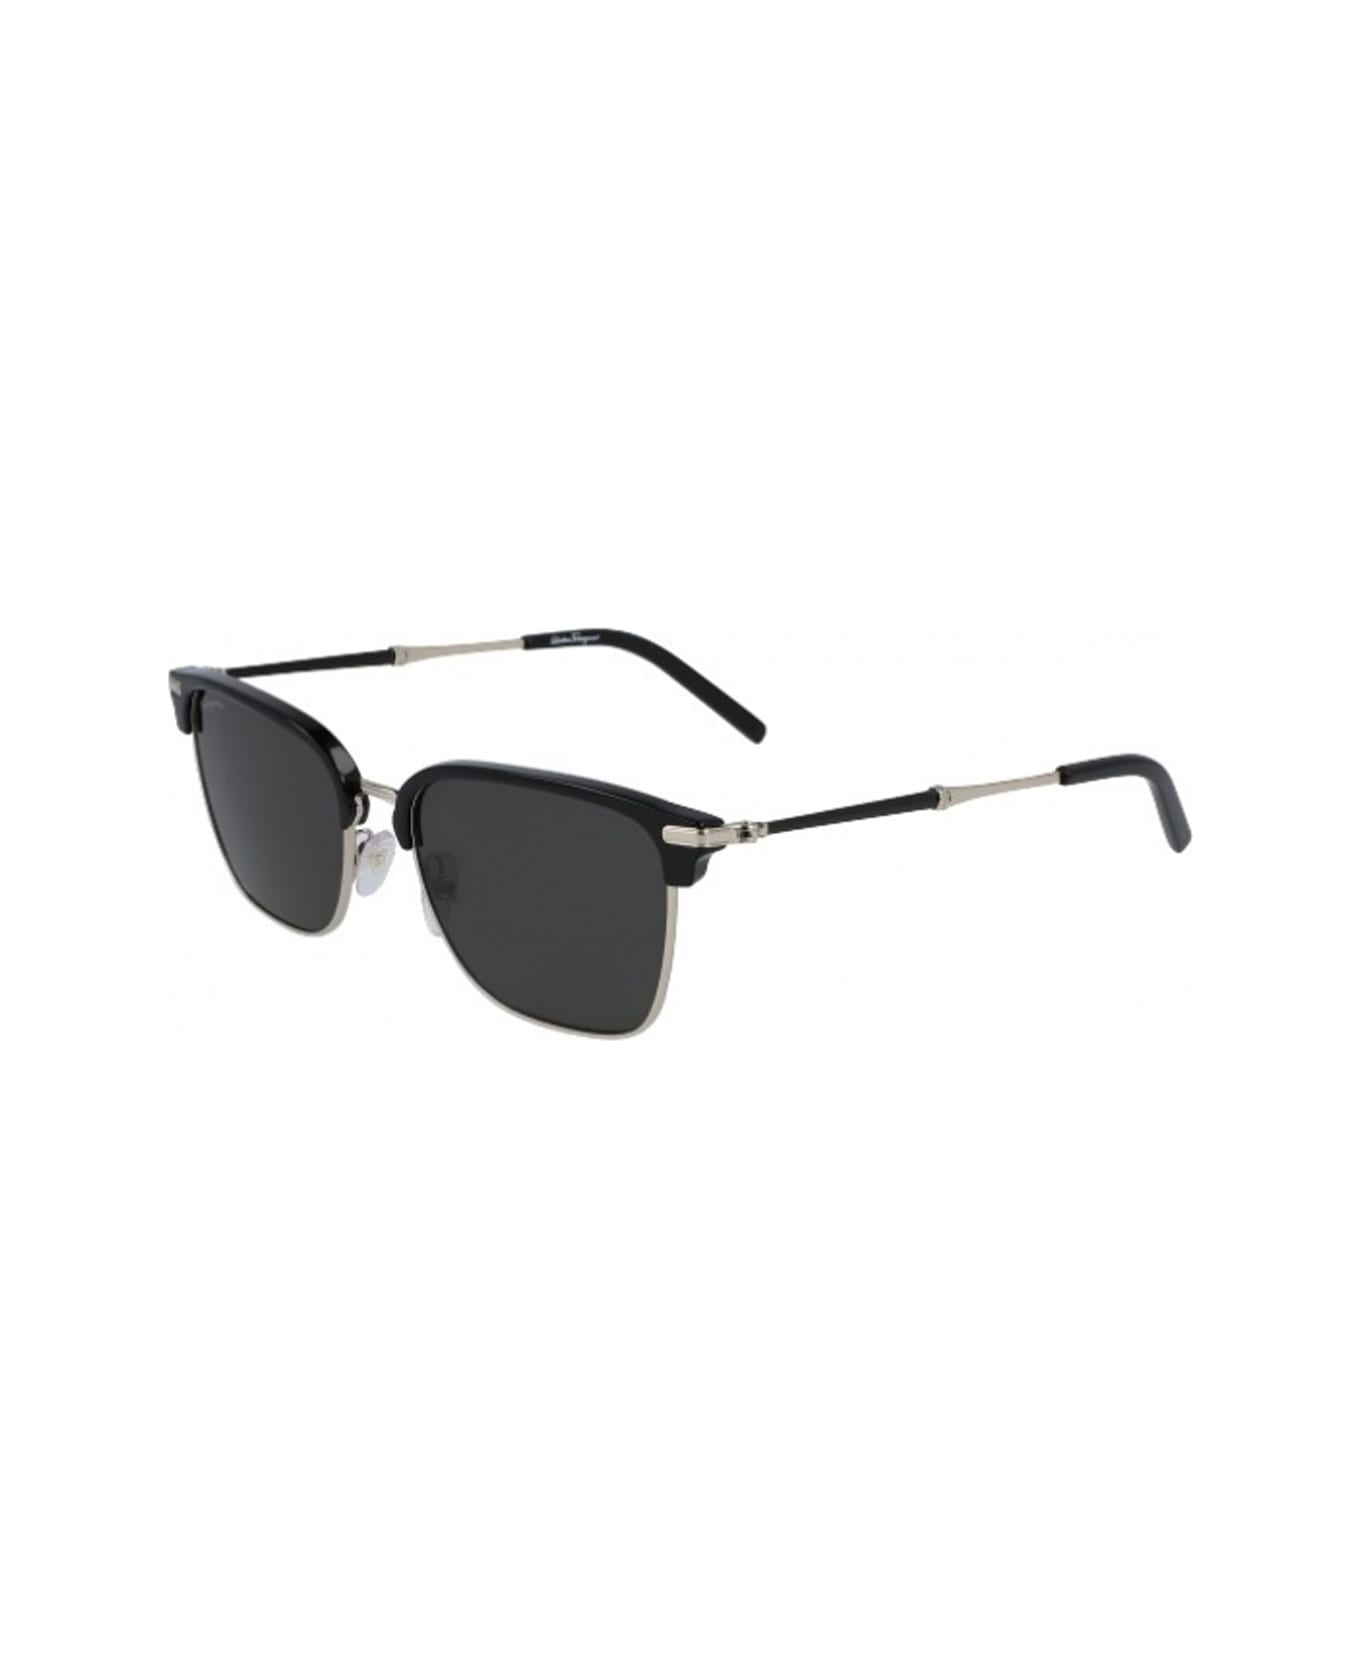 Salvatore Ferragamo Eyewear Sf227sp Sunglasses - Nero